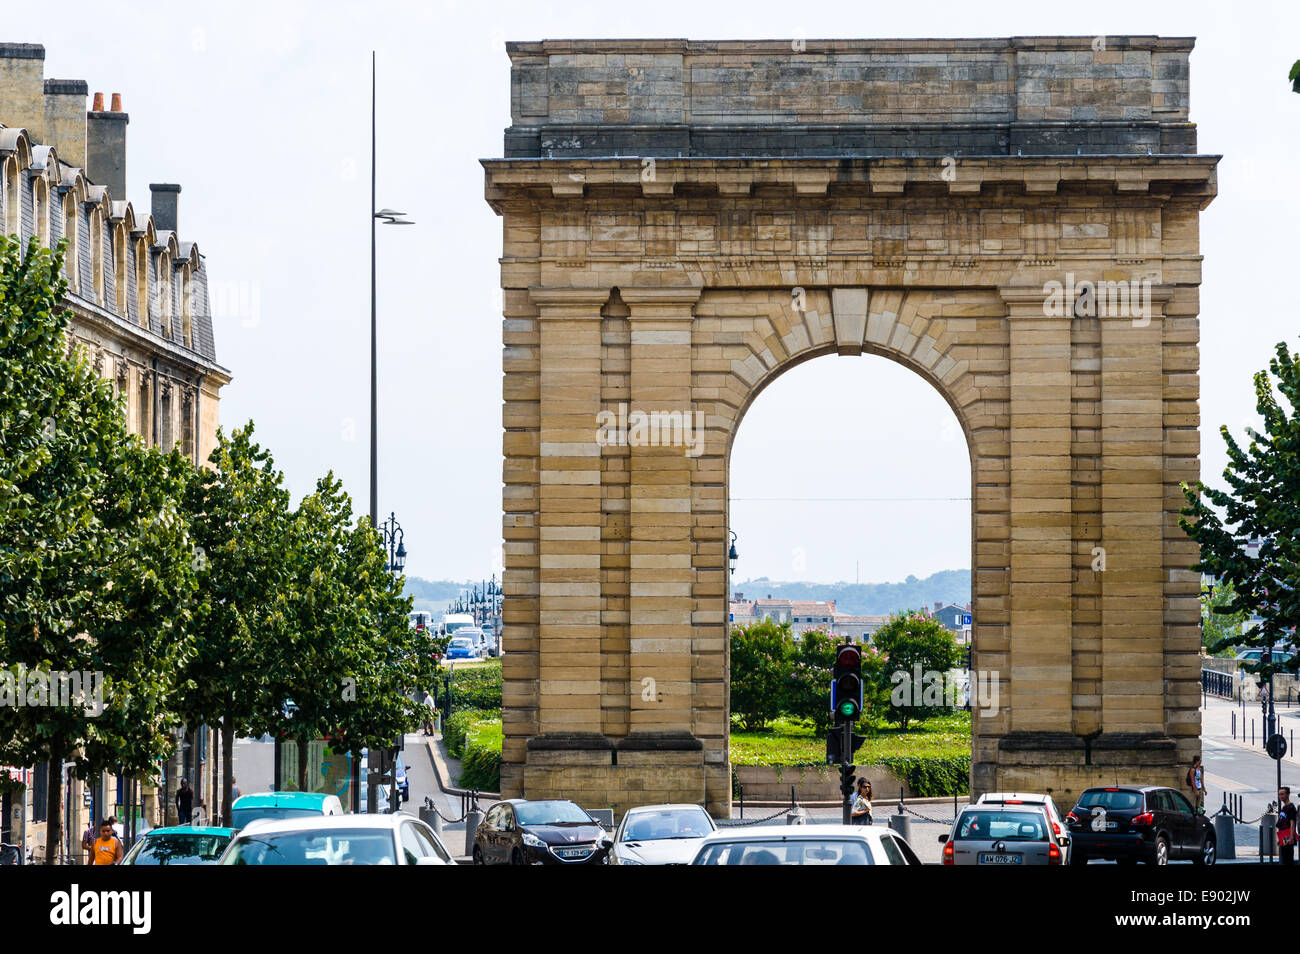 France, Bordeaux. Porte de Bourgogne, and old city wall gate. Stock Photo